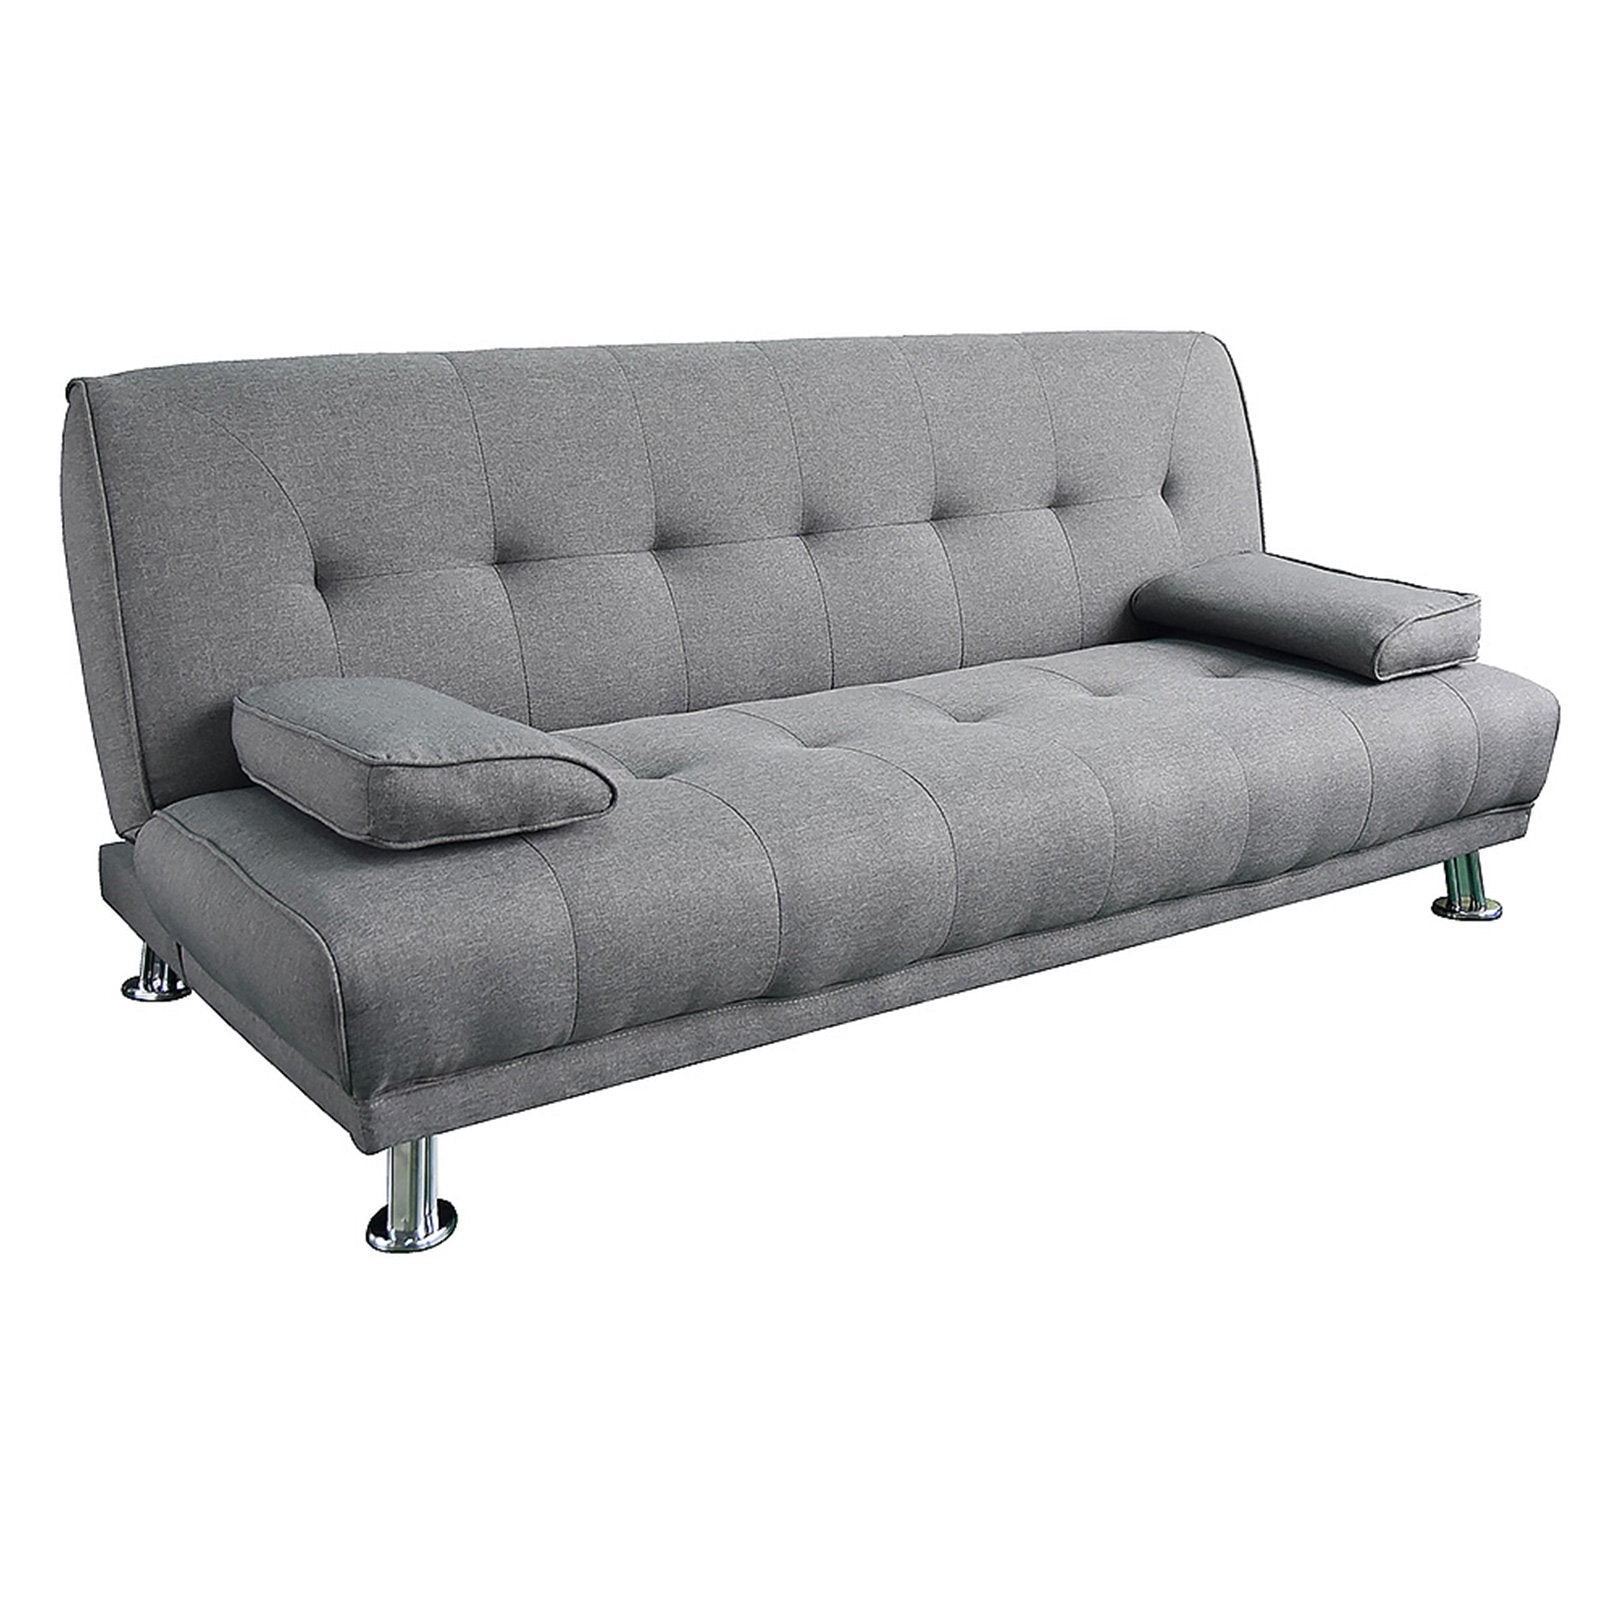 Sarantino Manhattan Sofa Bed Lounge Couch Futon Furniture Home Light Grey Linen Suite - 0